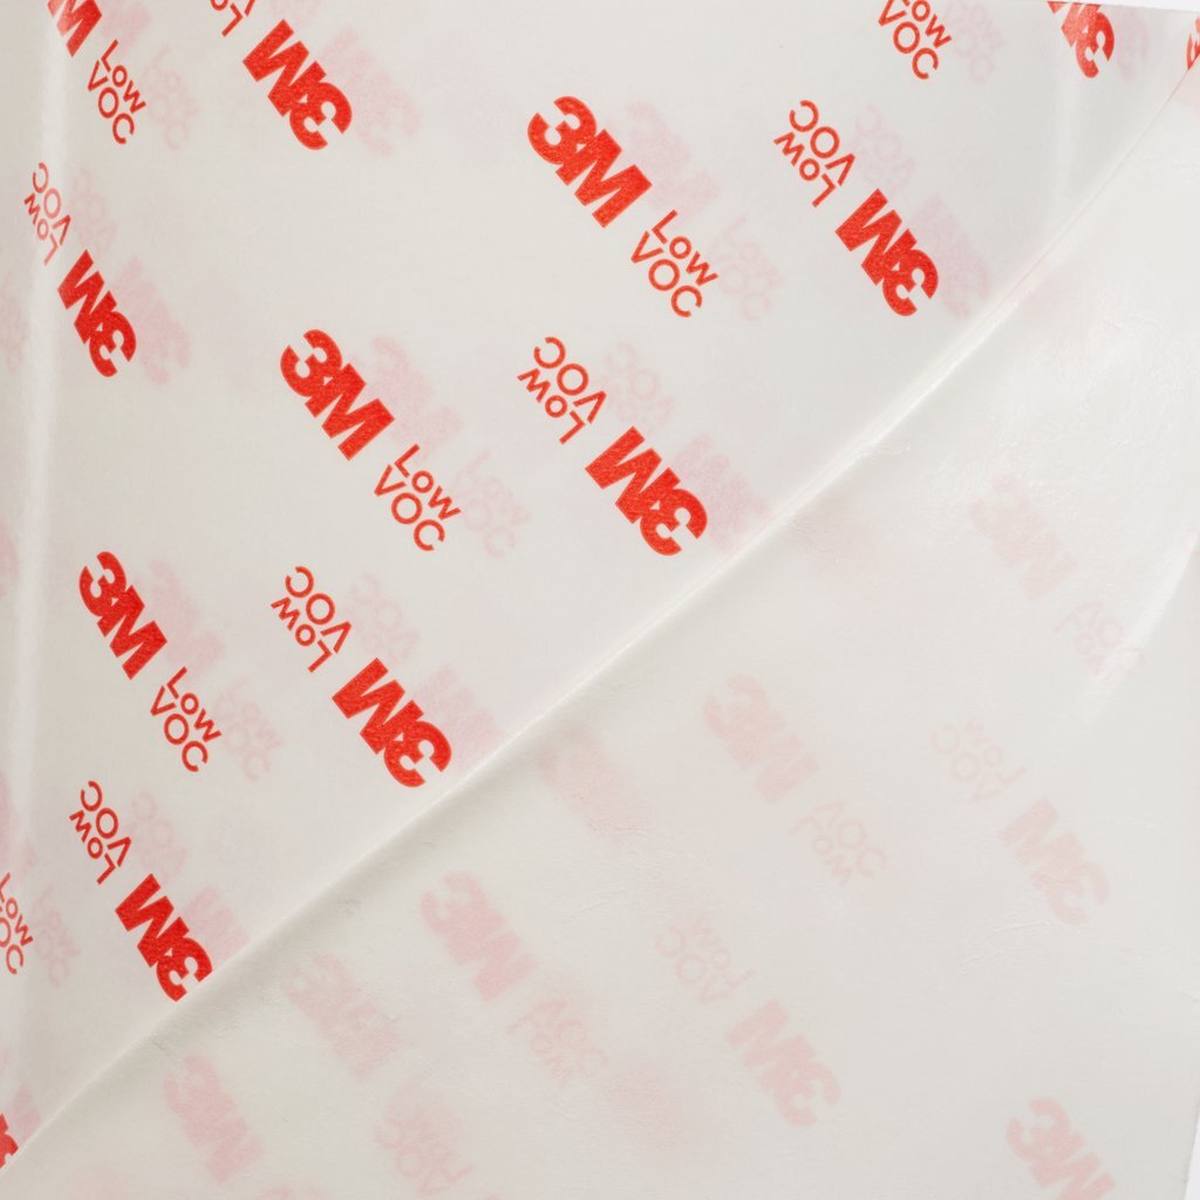 3M Dubbelzijdig plakband met vliespapier als rug 99015LVC, wit, 30 mm x 50 m, 0,15 mm